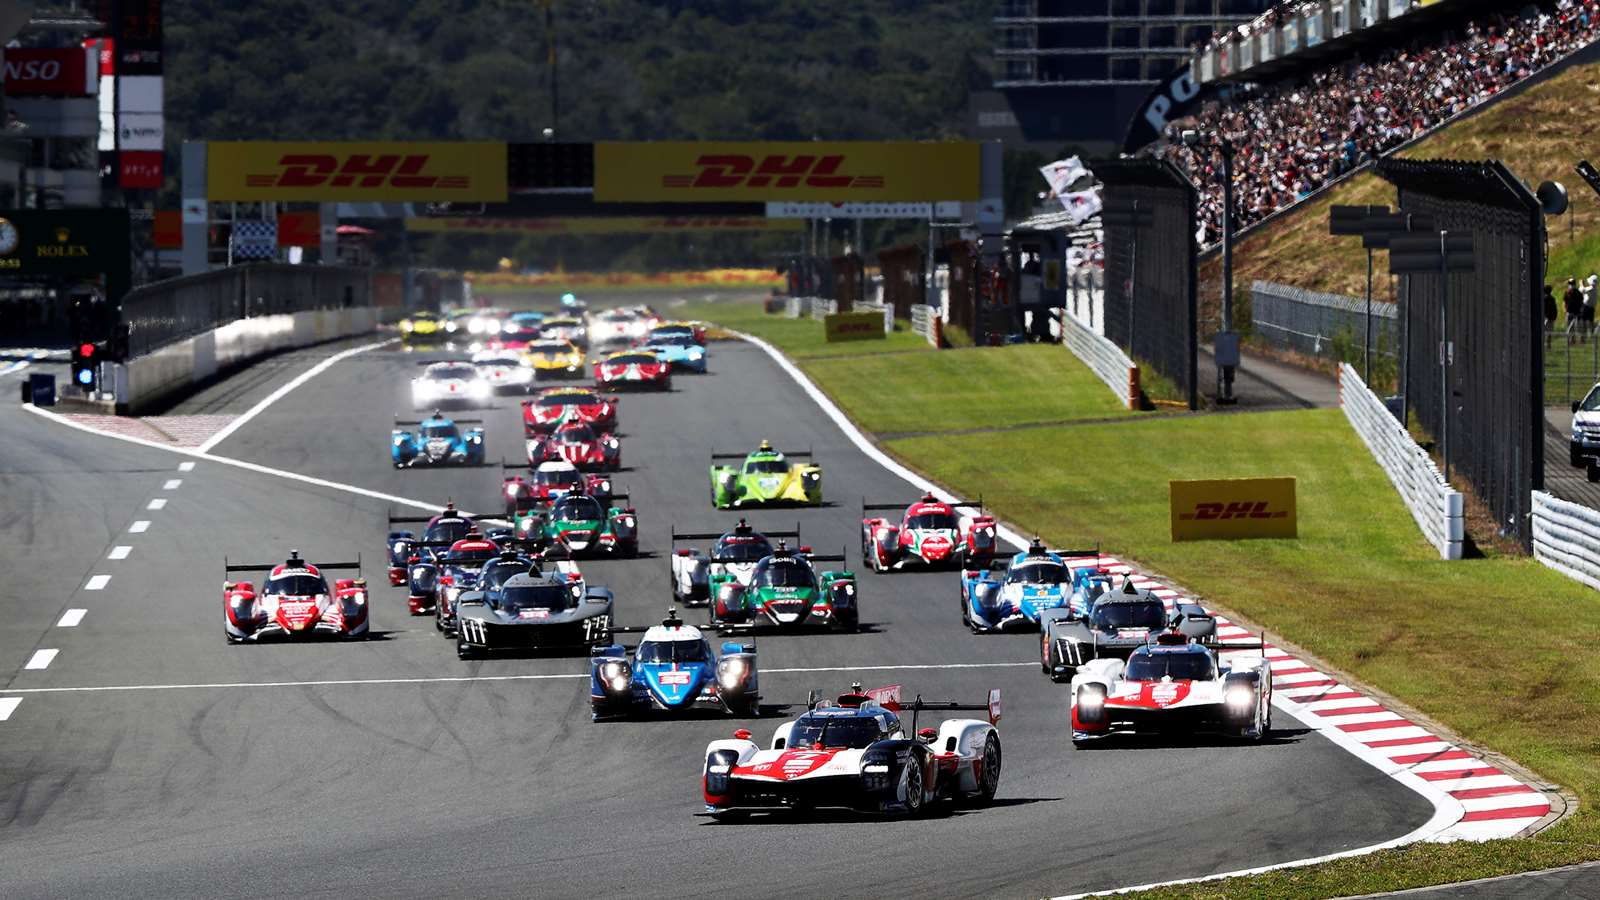 FIA World Endurance Championship Returns to Circuit of The